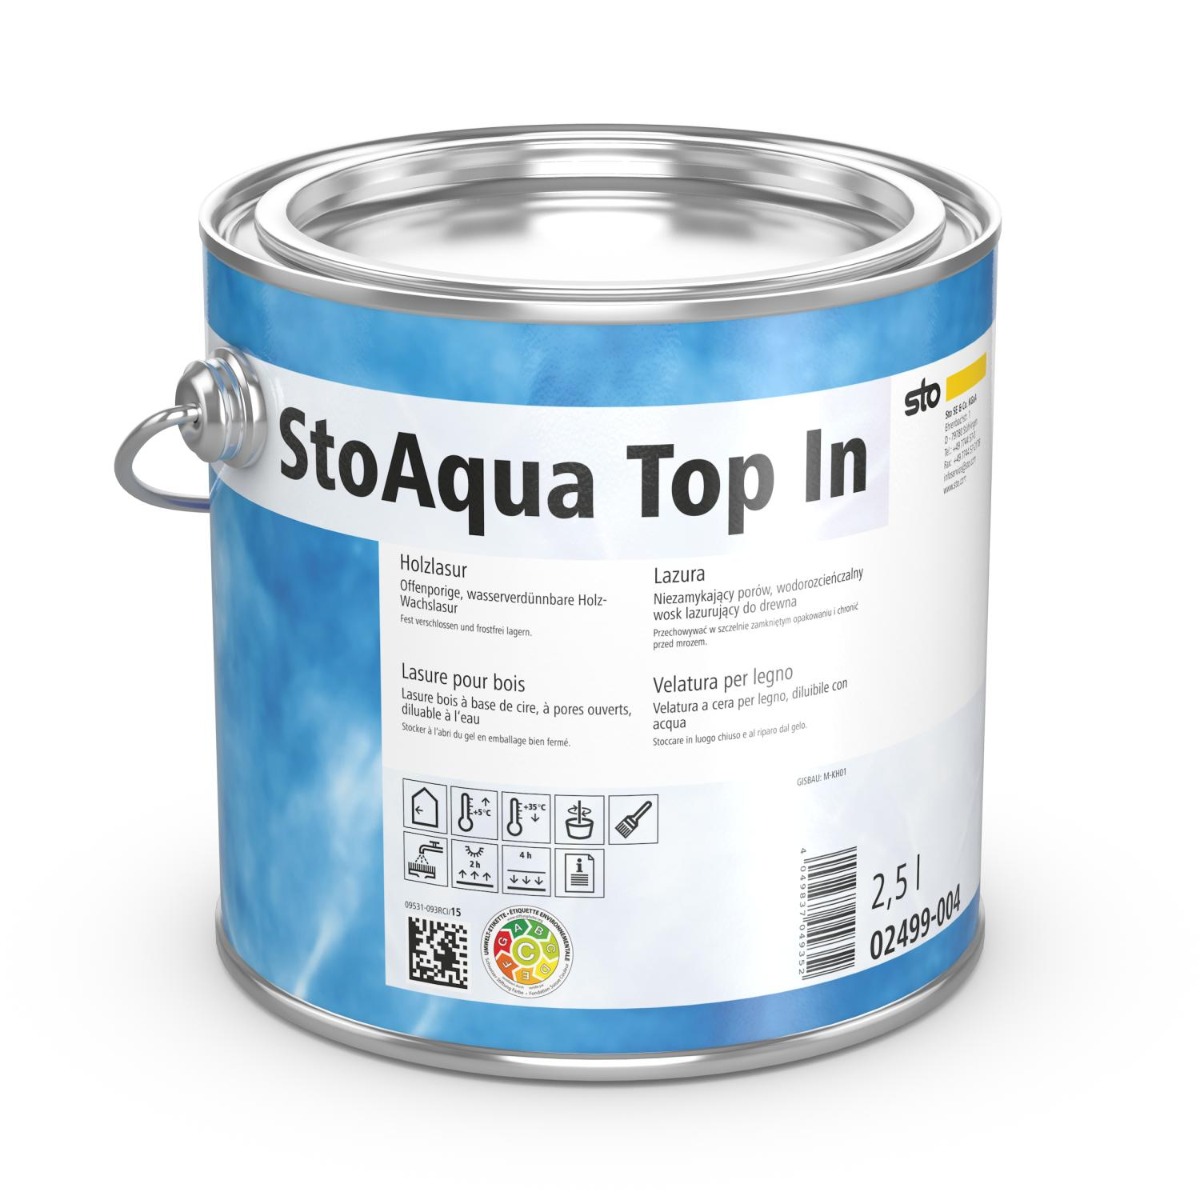 StoAqua Top In-Farbtonklasse I 2,5 Liter-2,5 Liter Dose